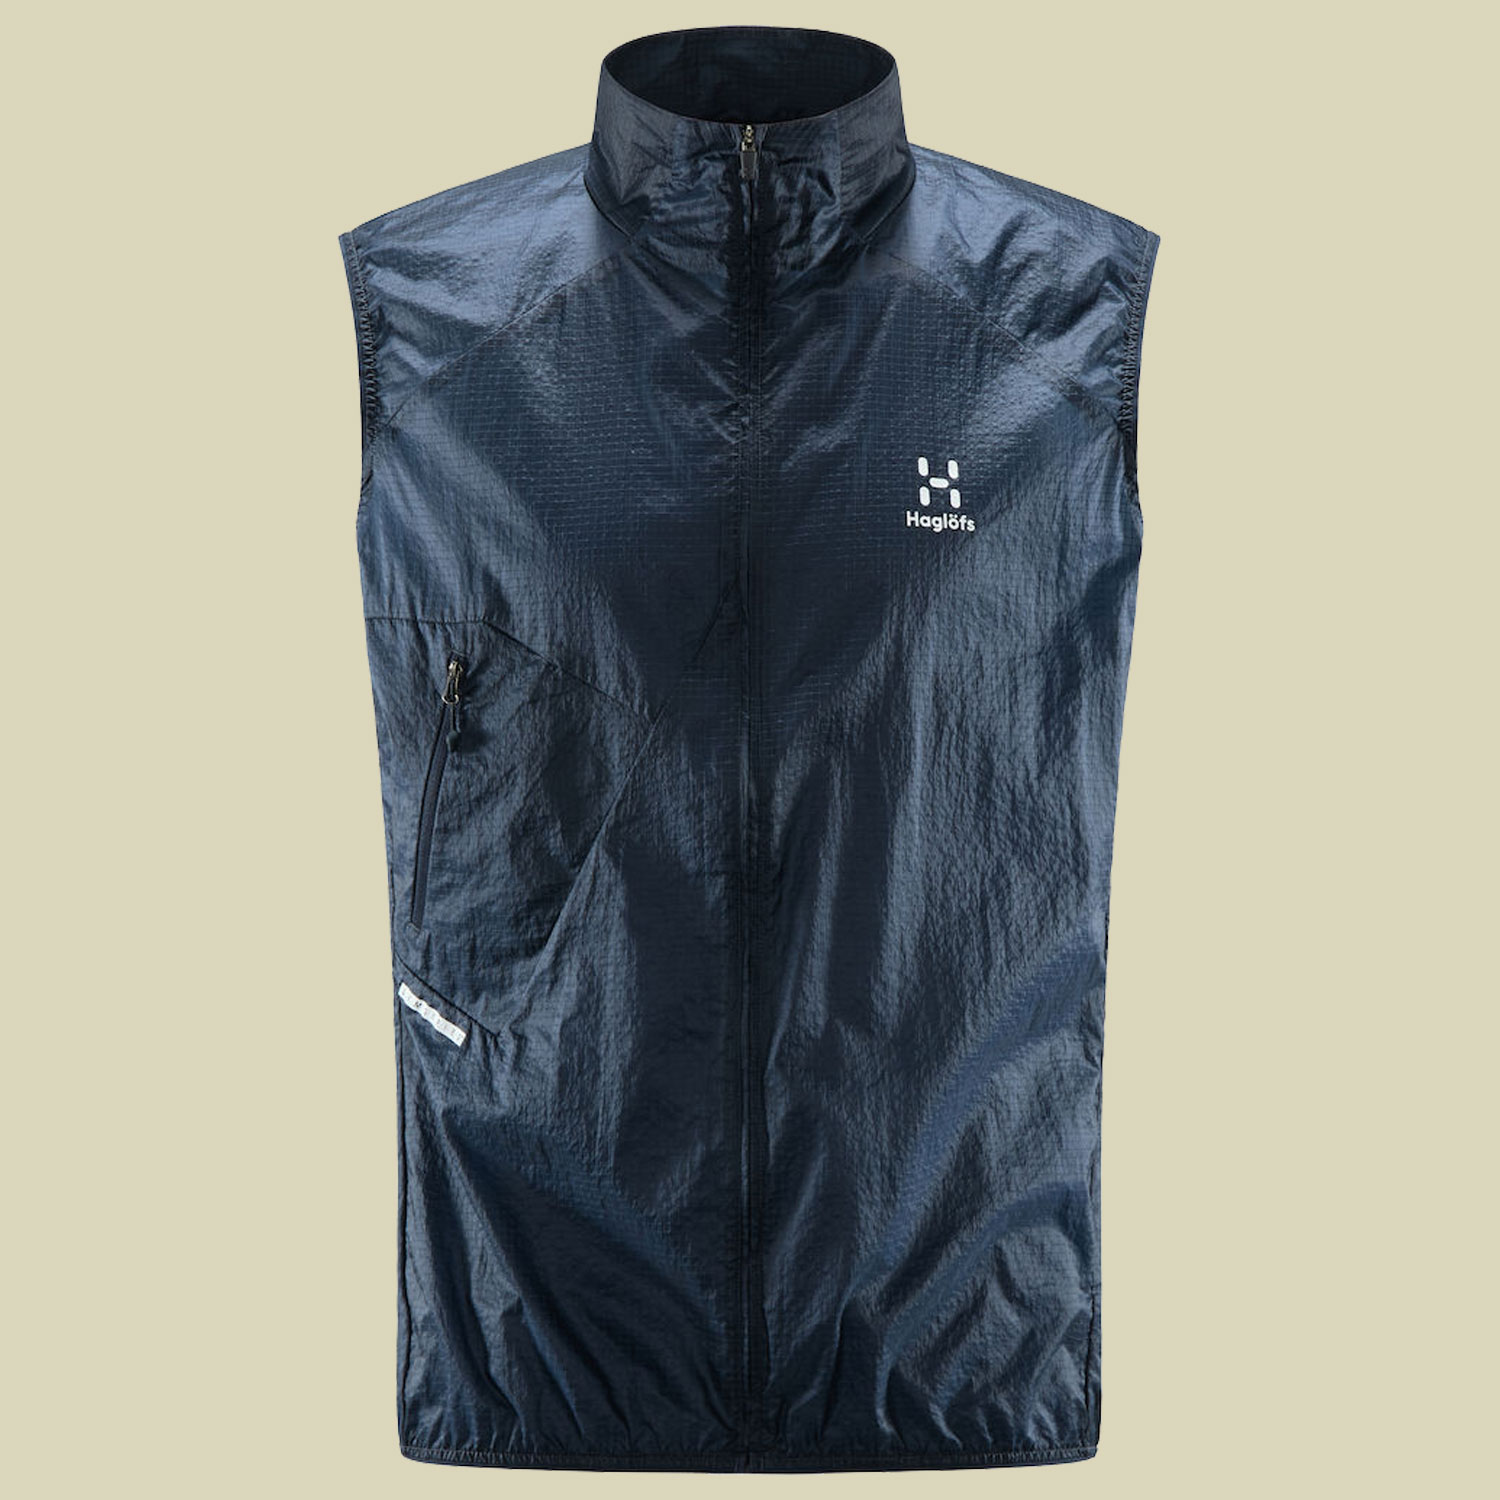 L.I.M. Shield Comp Vest Men Größe L  Farbe tarn blue